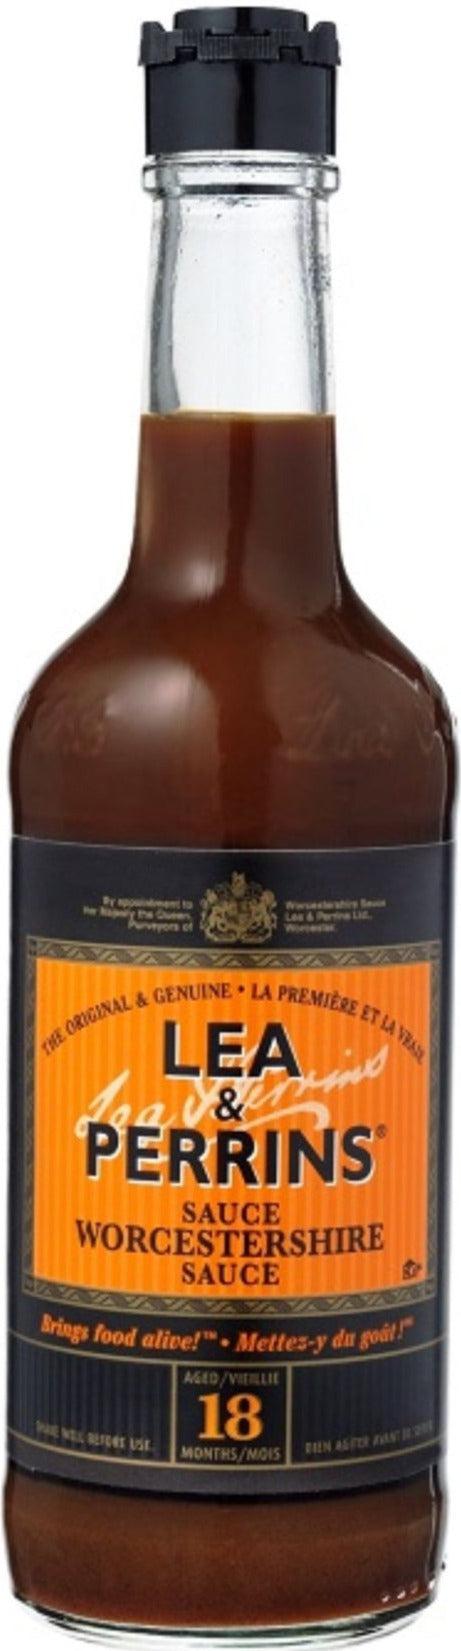 Lea & Perrins - Worcestershire Sauce